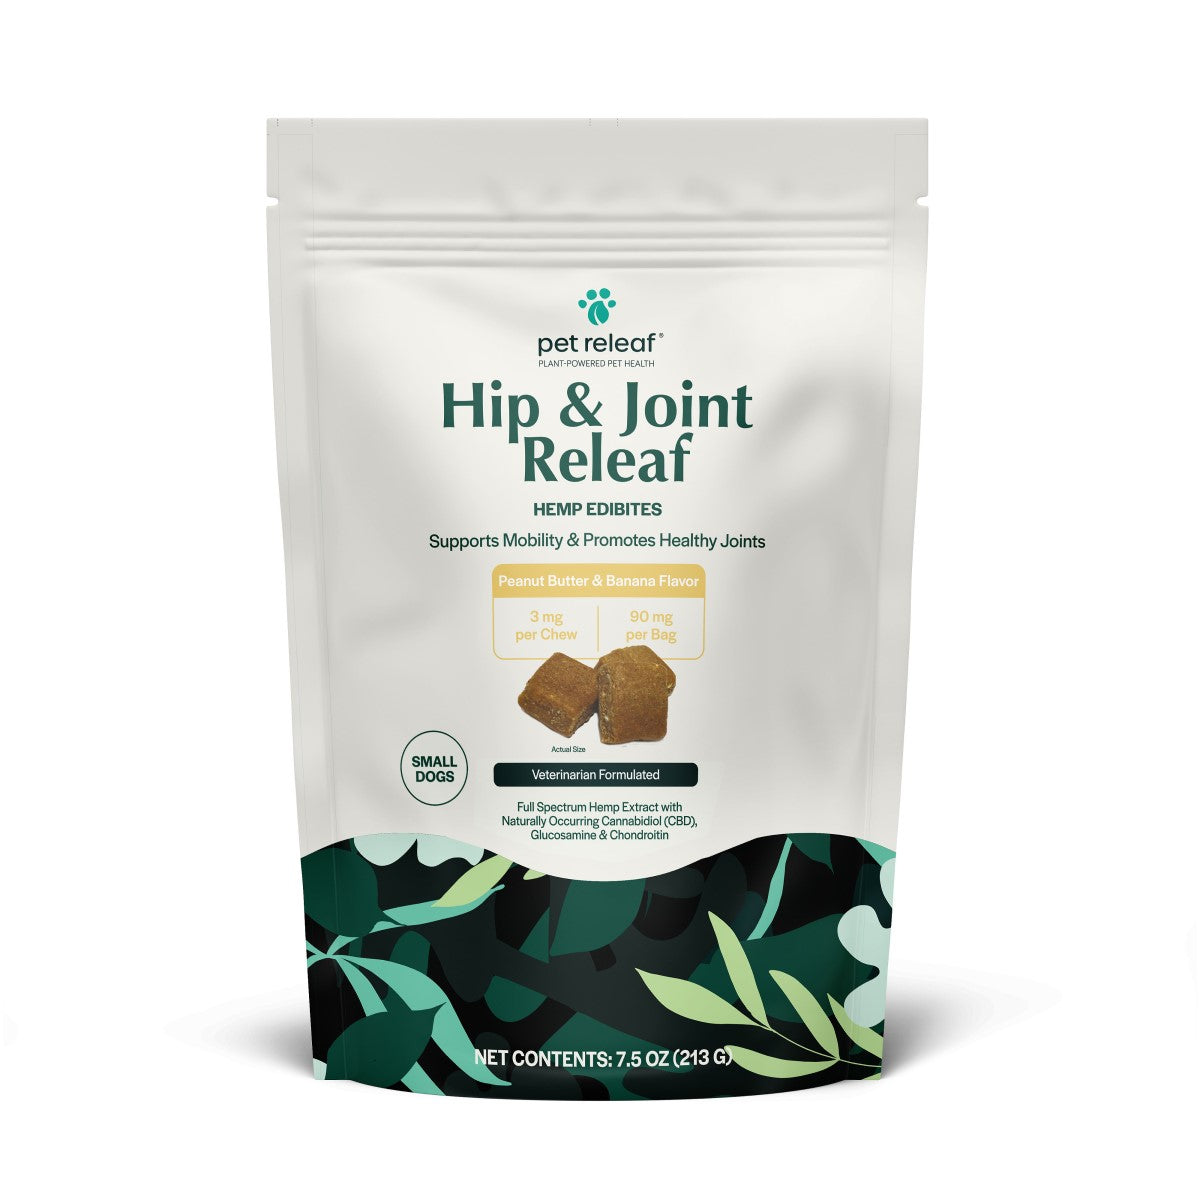 Pet Releaf Hemp Edibites Hip & Joint Releaf Soft Chew Peanut Butter Carob